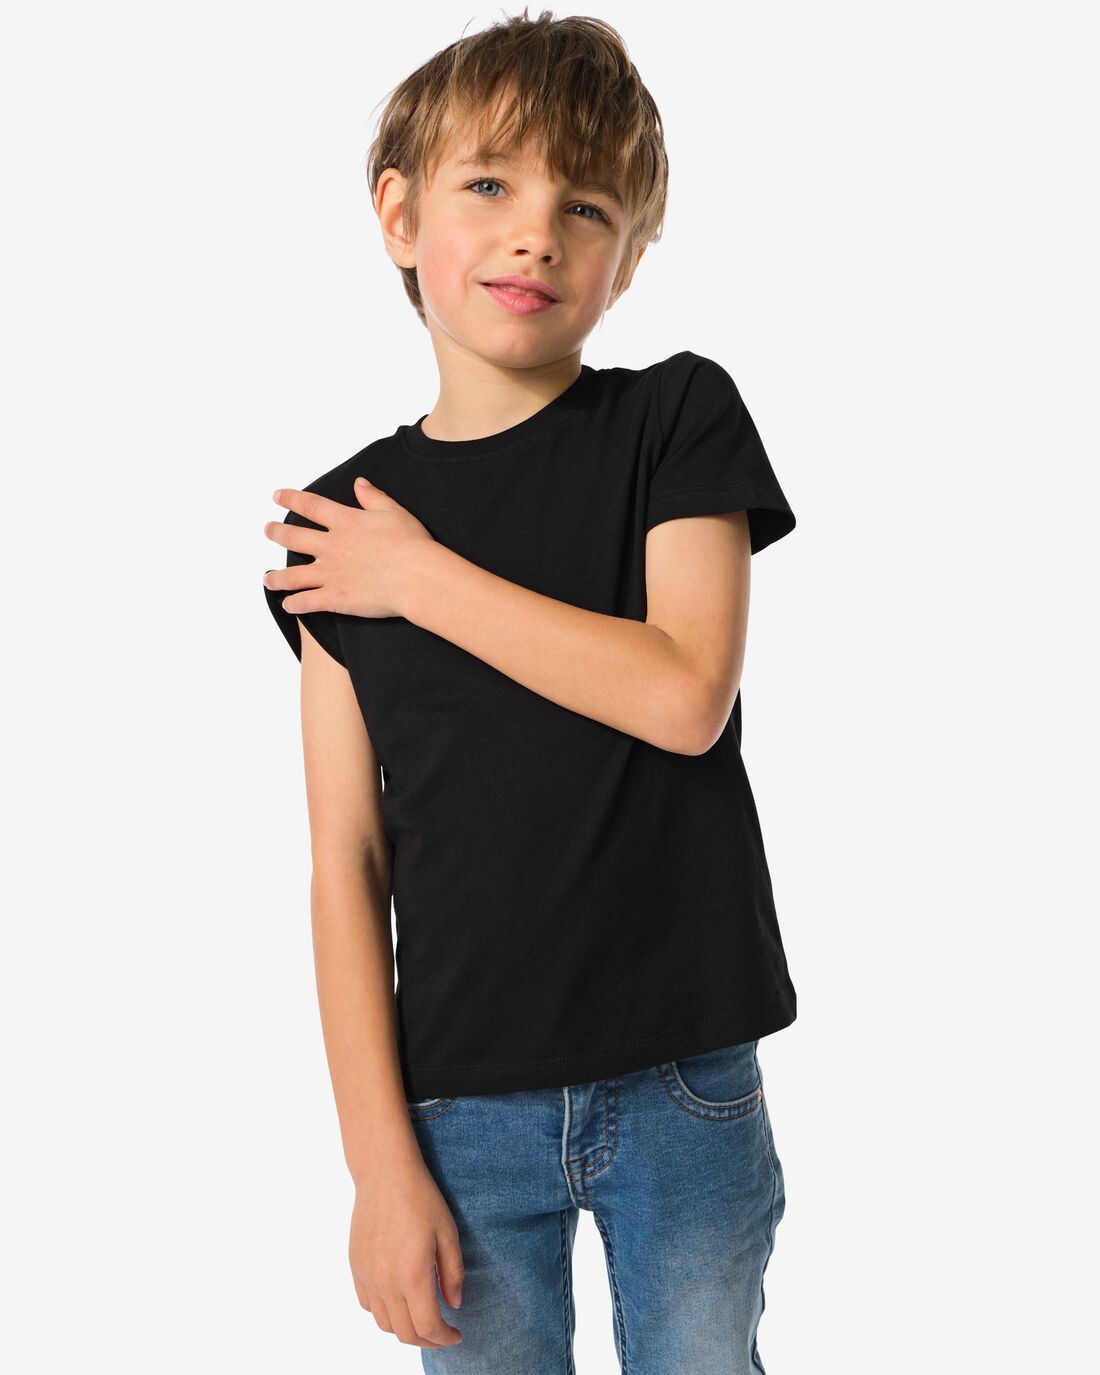 HEMA Kinder Basis T-shirts Stretch Katoen 2 Stuks Zwart (zwart)